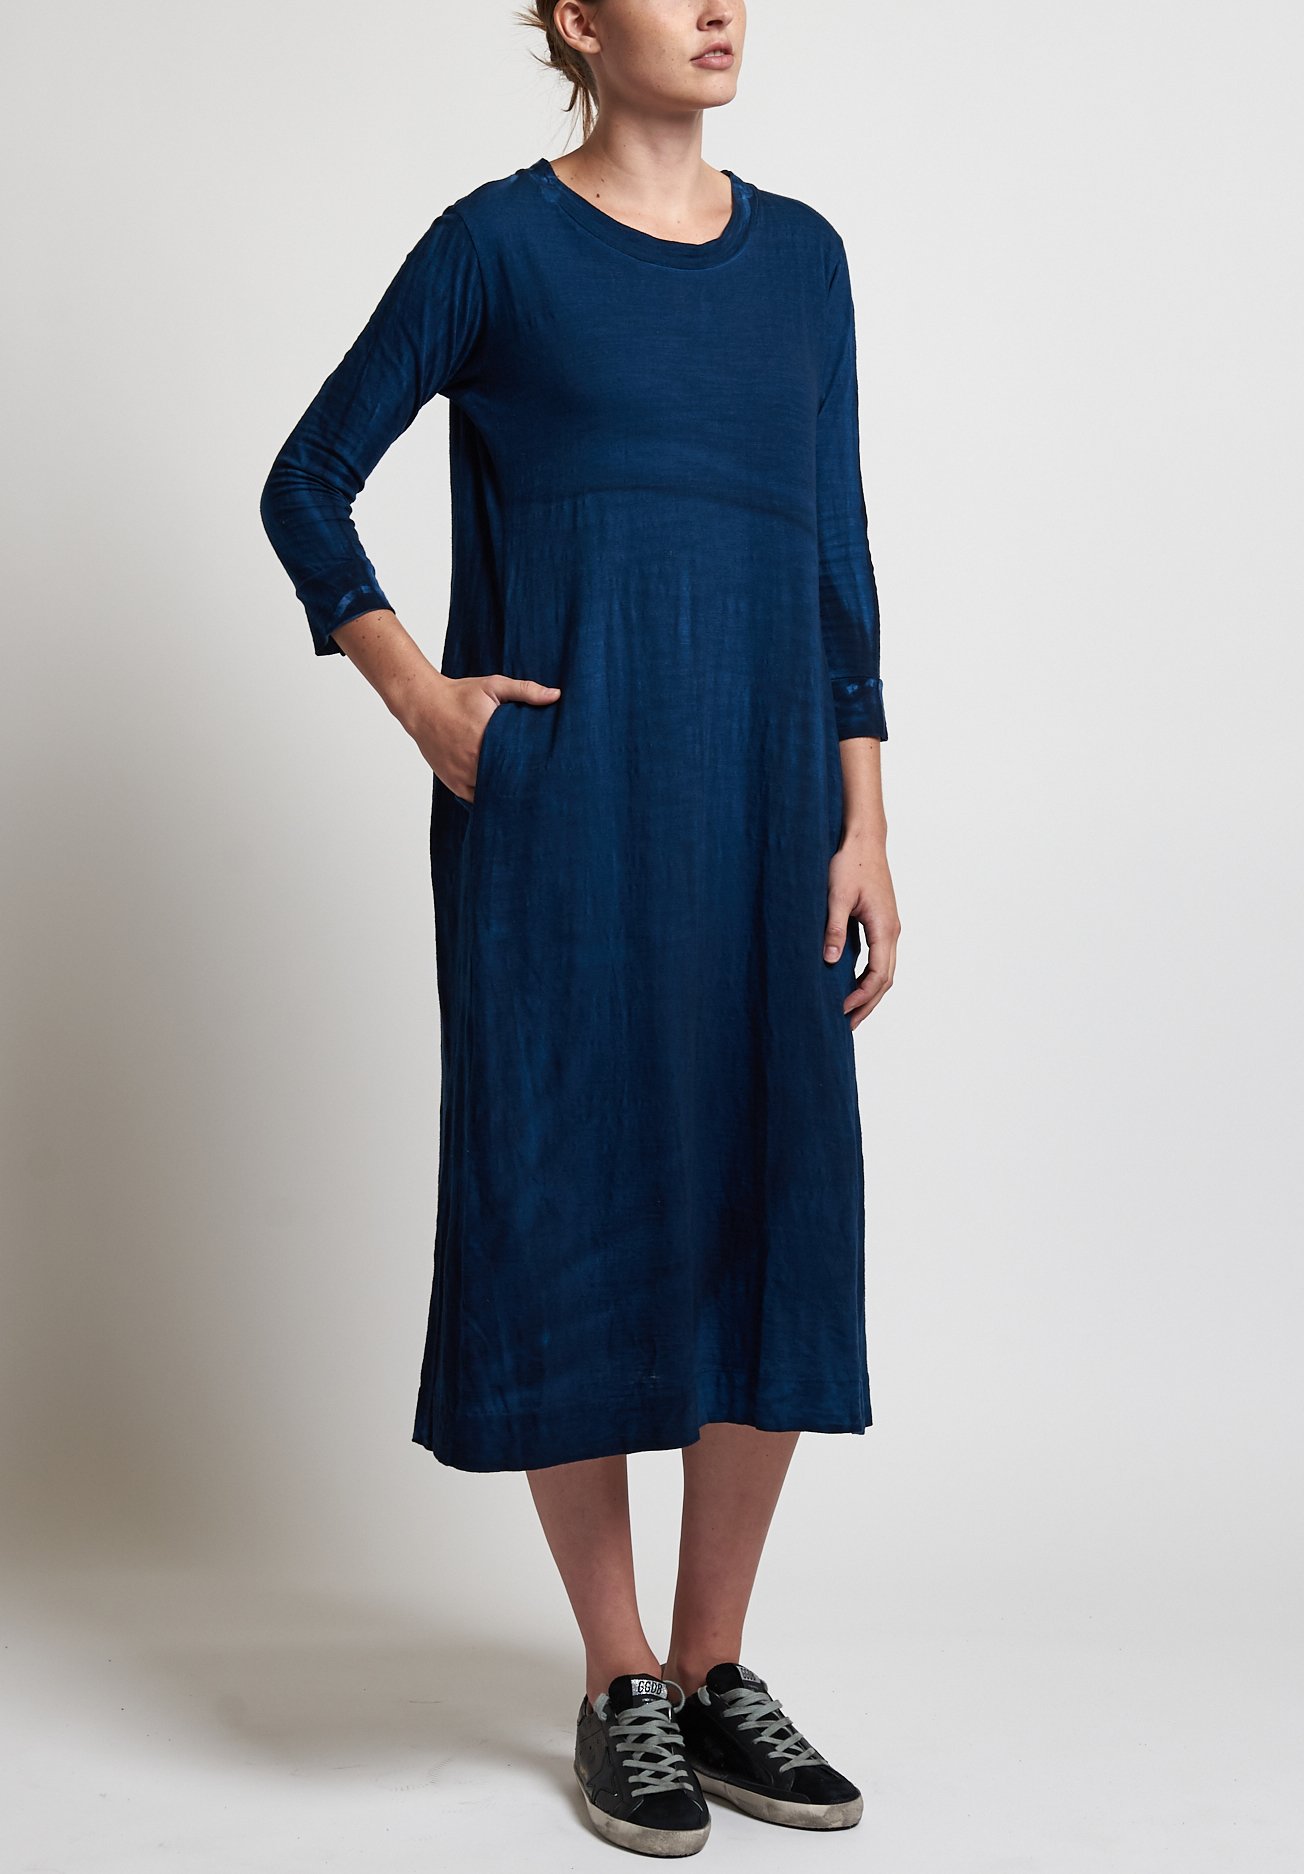 Gilda Midani Maria Dress in Dark Deep Blue | Santa Fe Dry Goods ...